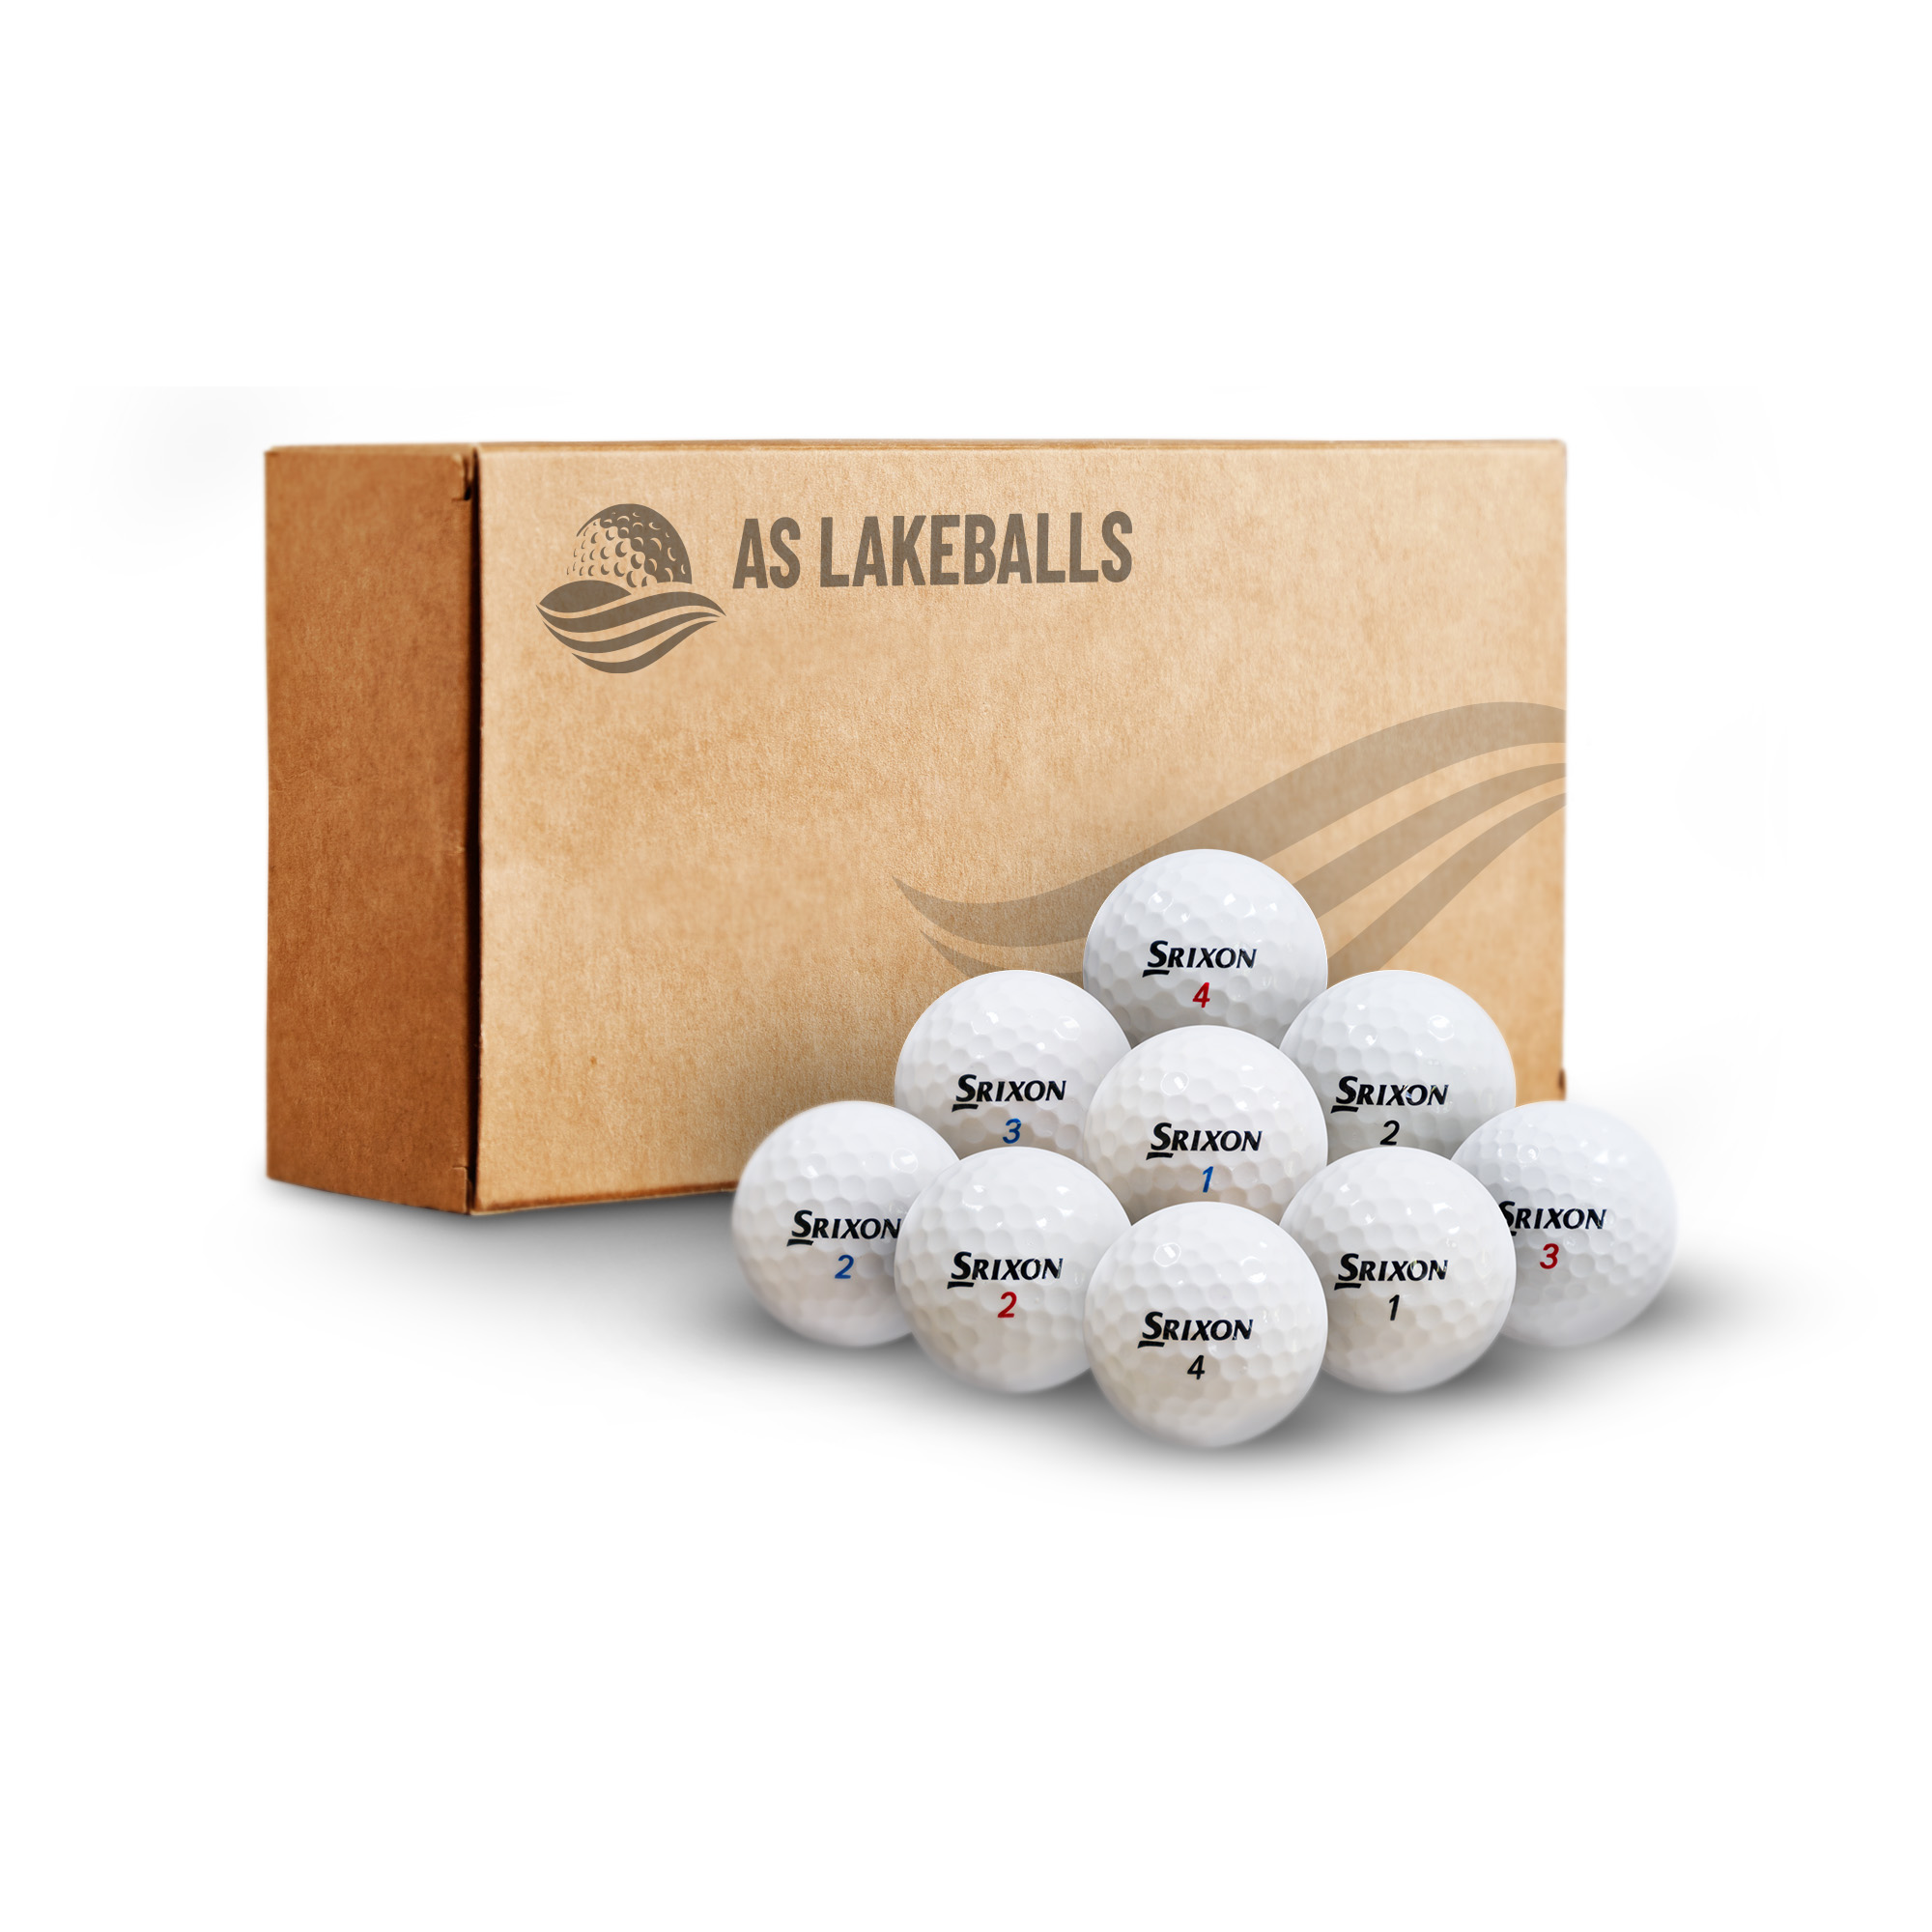 100 Stück Srixon Mix AA Lakeballs